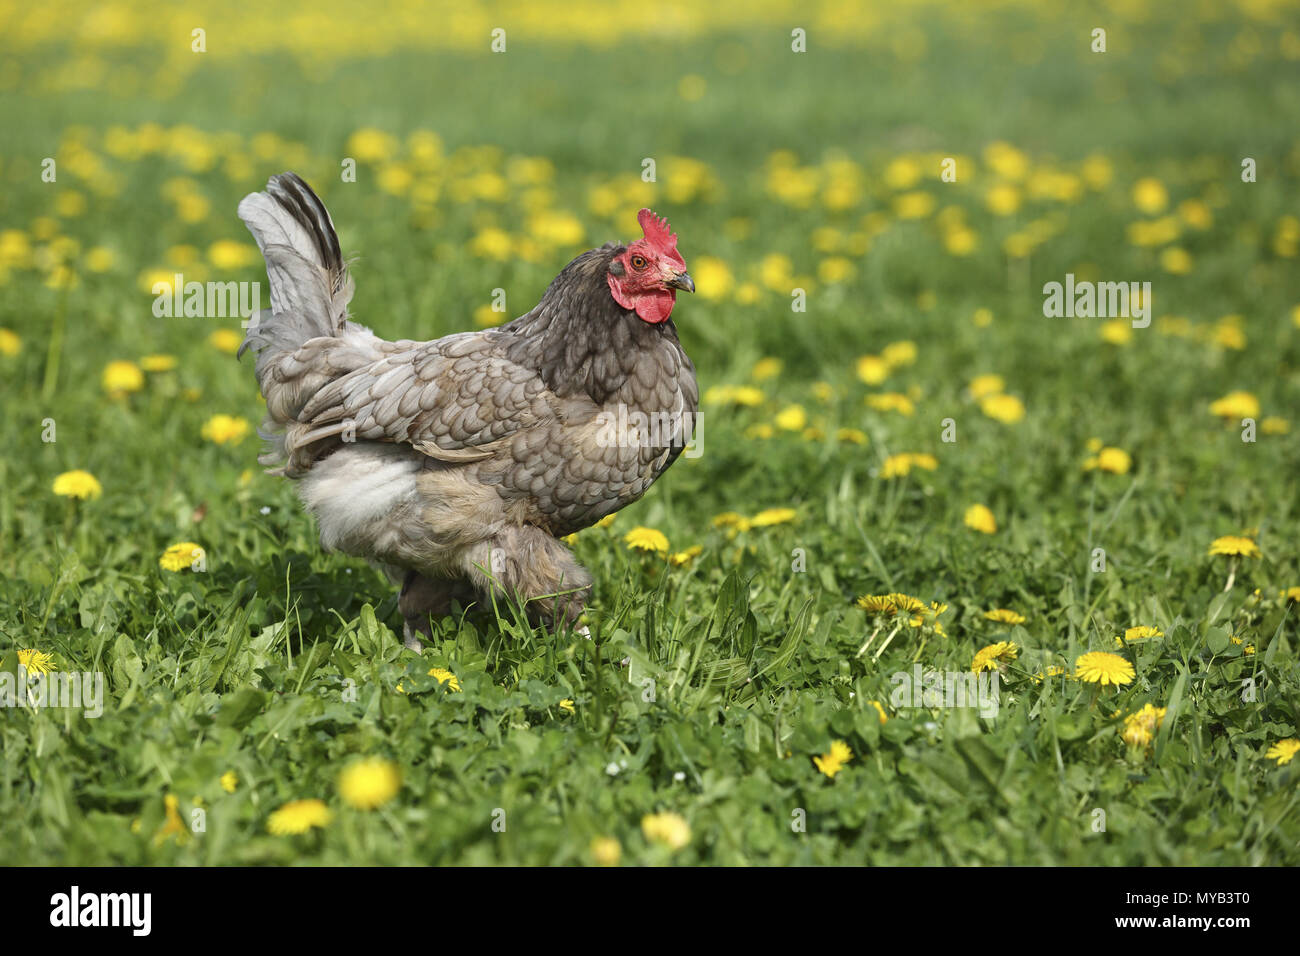 Domestic Chicken, Koenigsberger chicken. Hen in a meadow with Dandelion flowers. Germany Stock Photo